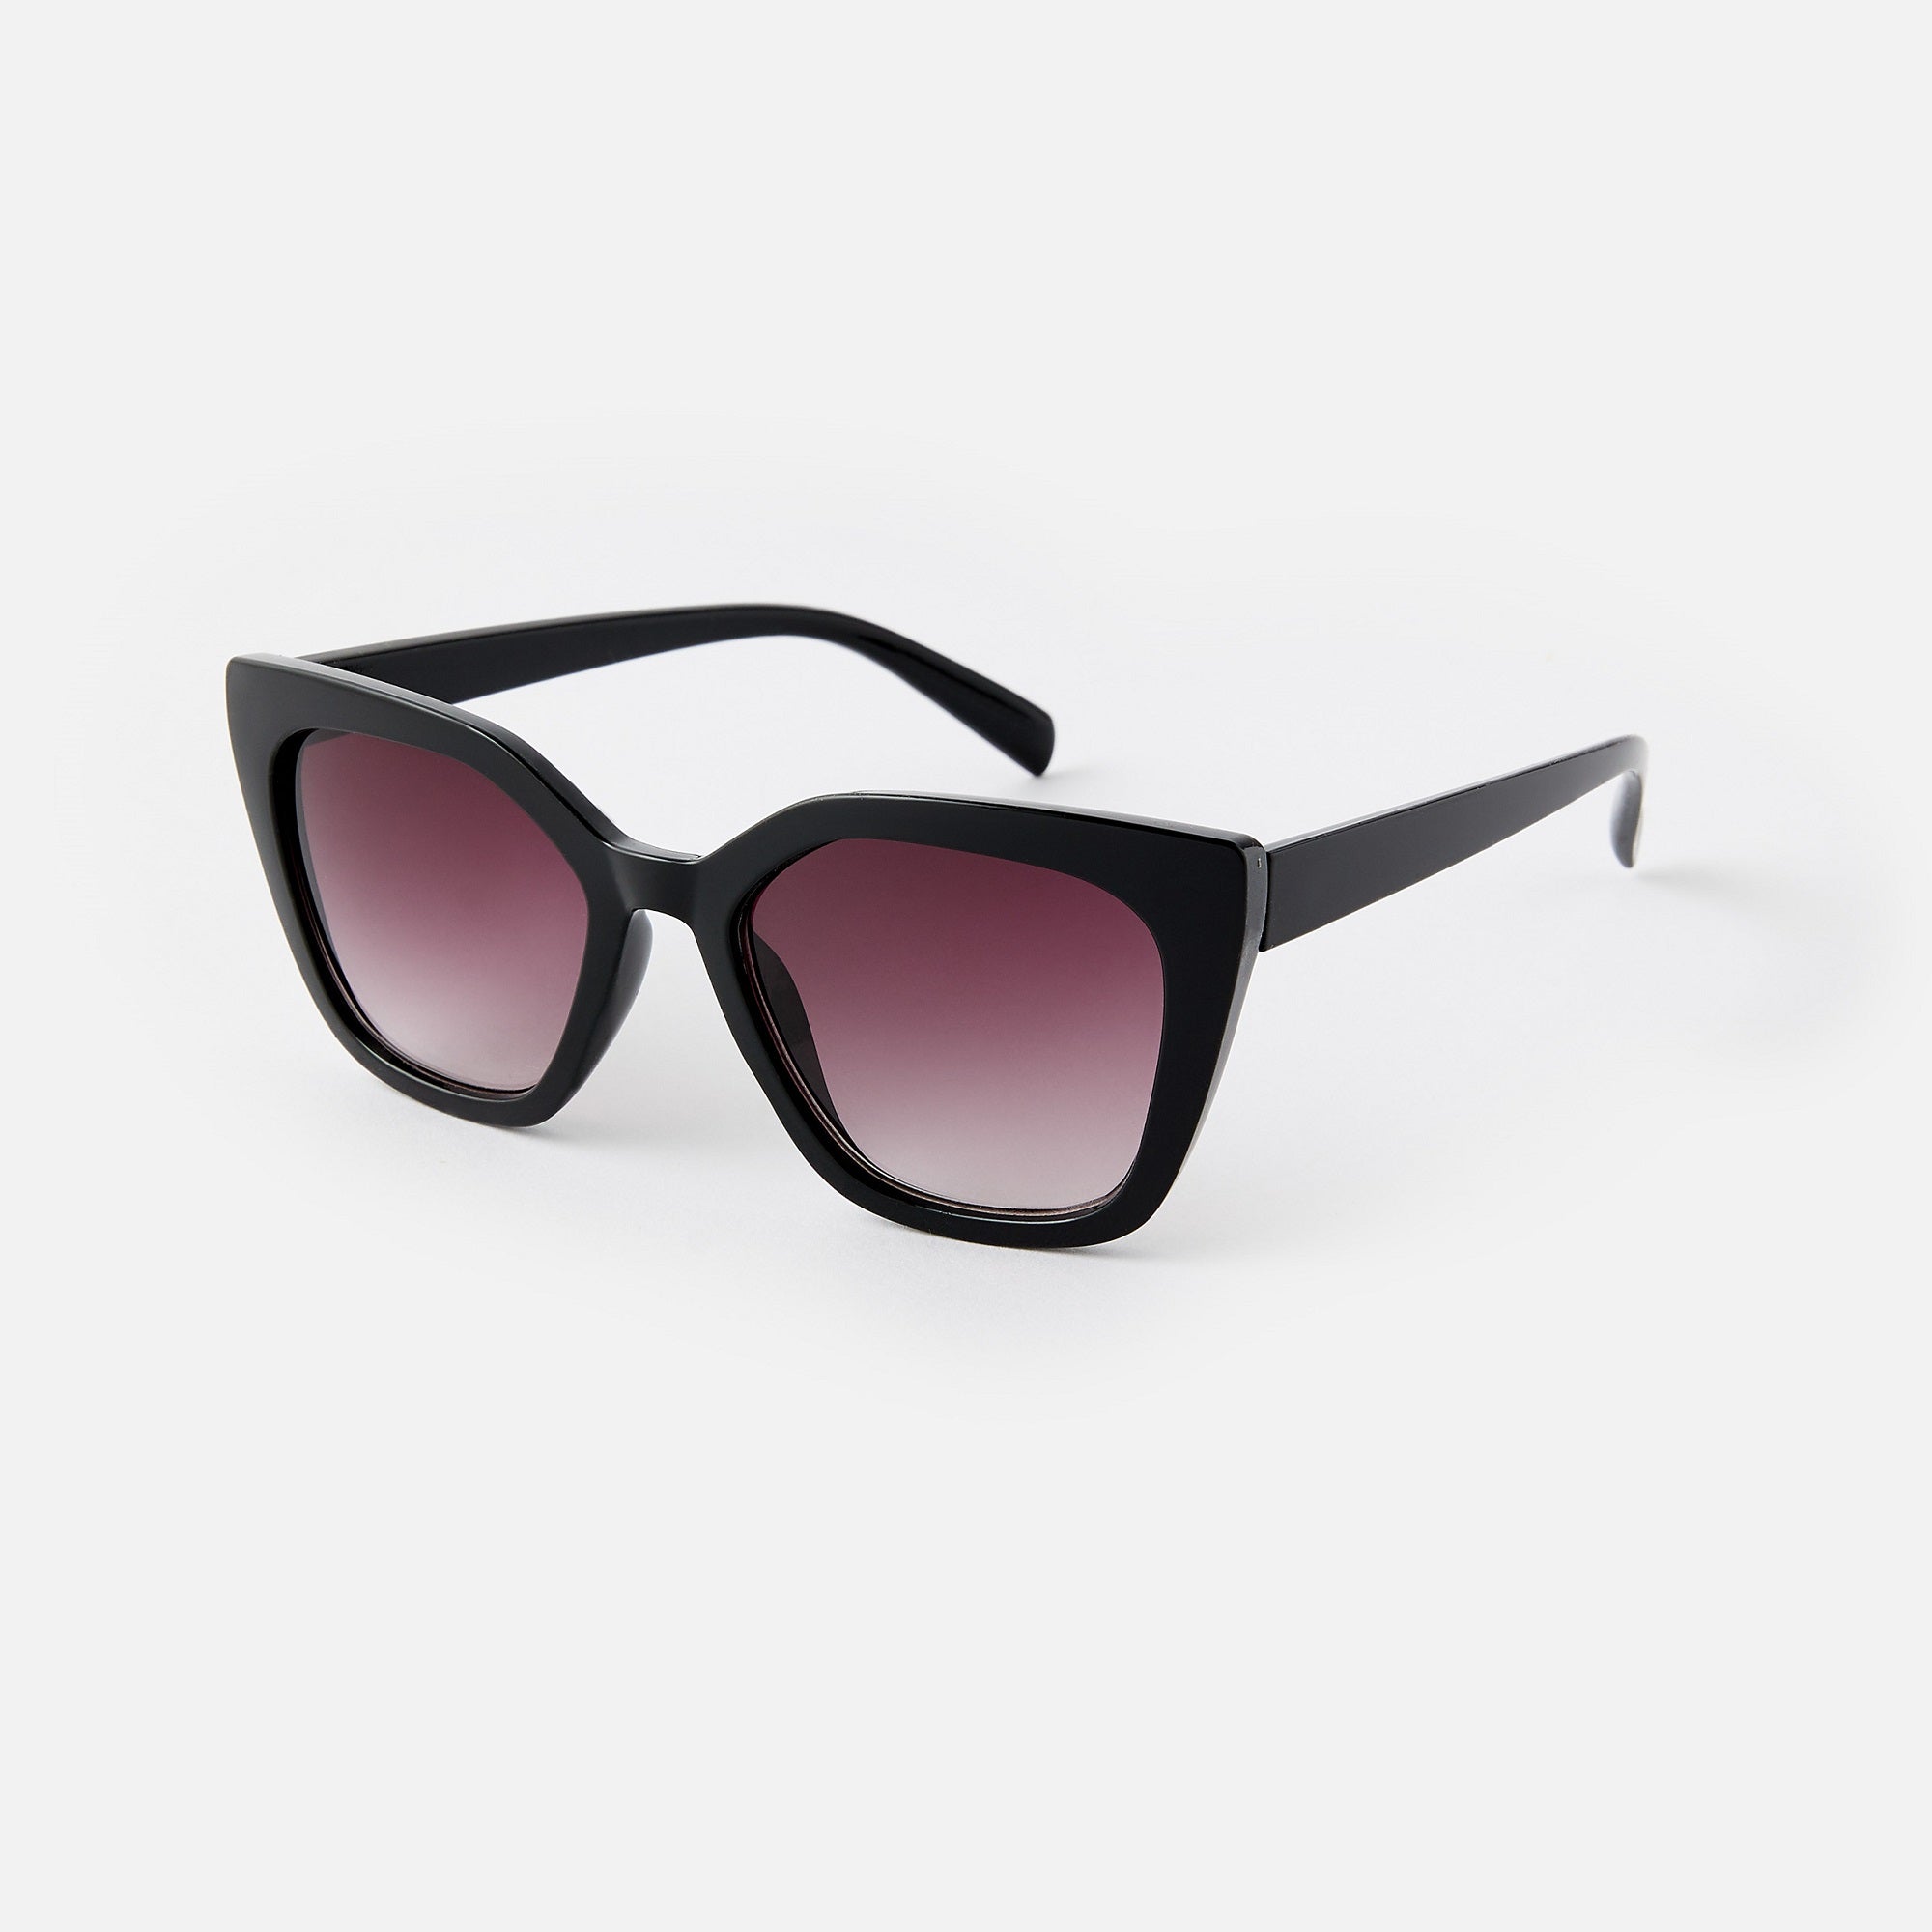 Accessorize London Chloe Angular Sunglasses